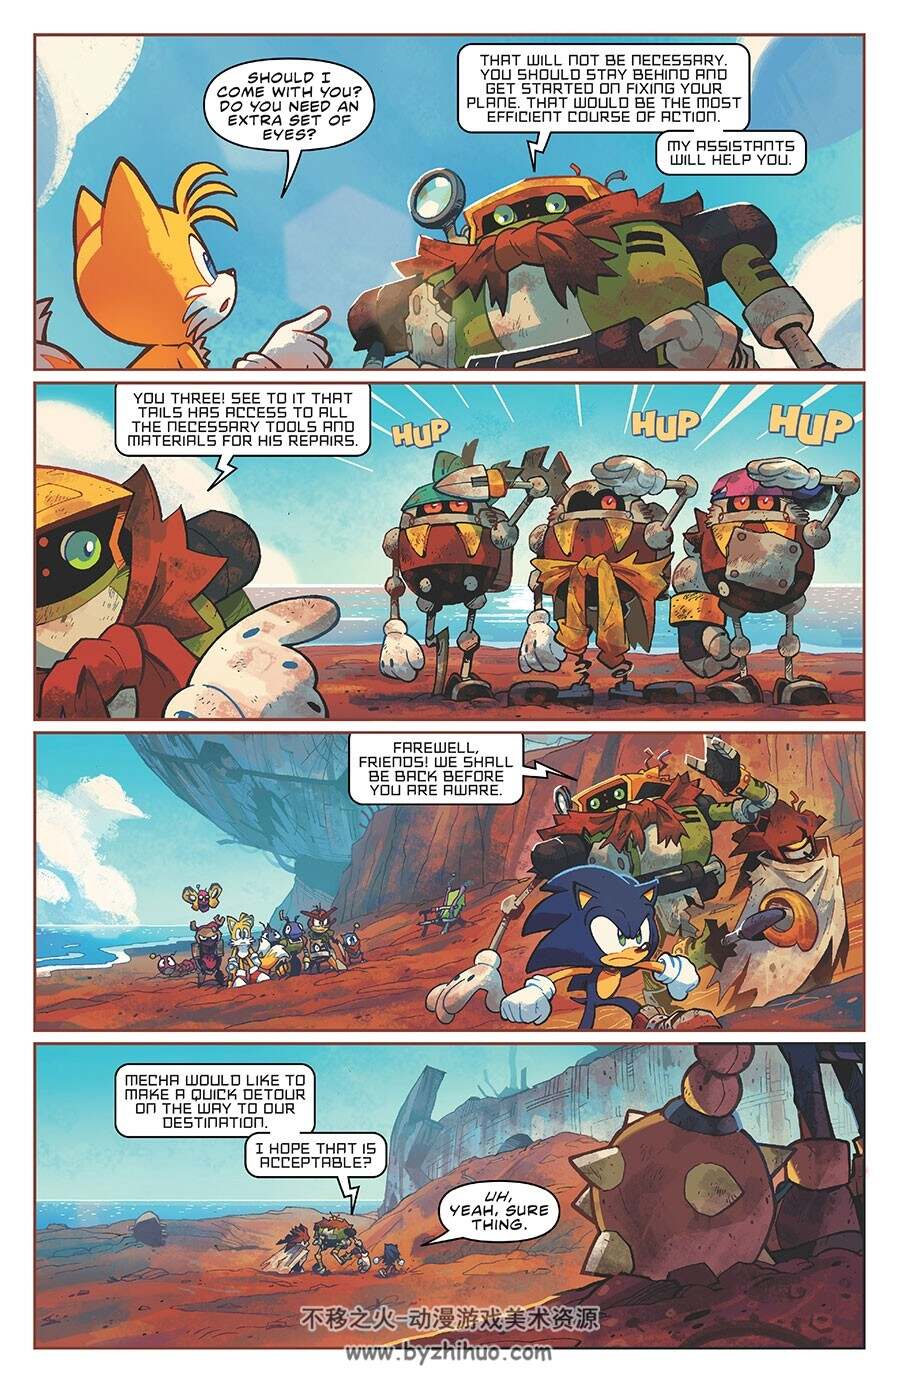 Sonic the Hedgehog Scrapnik Island 第2册 漫画 百度网盘下载